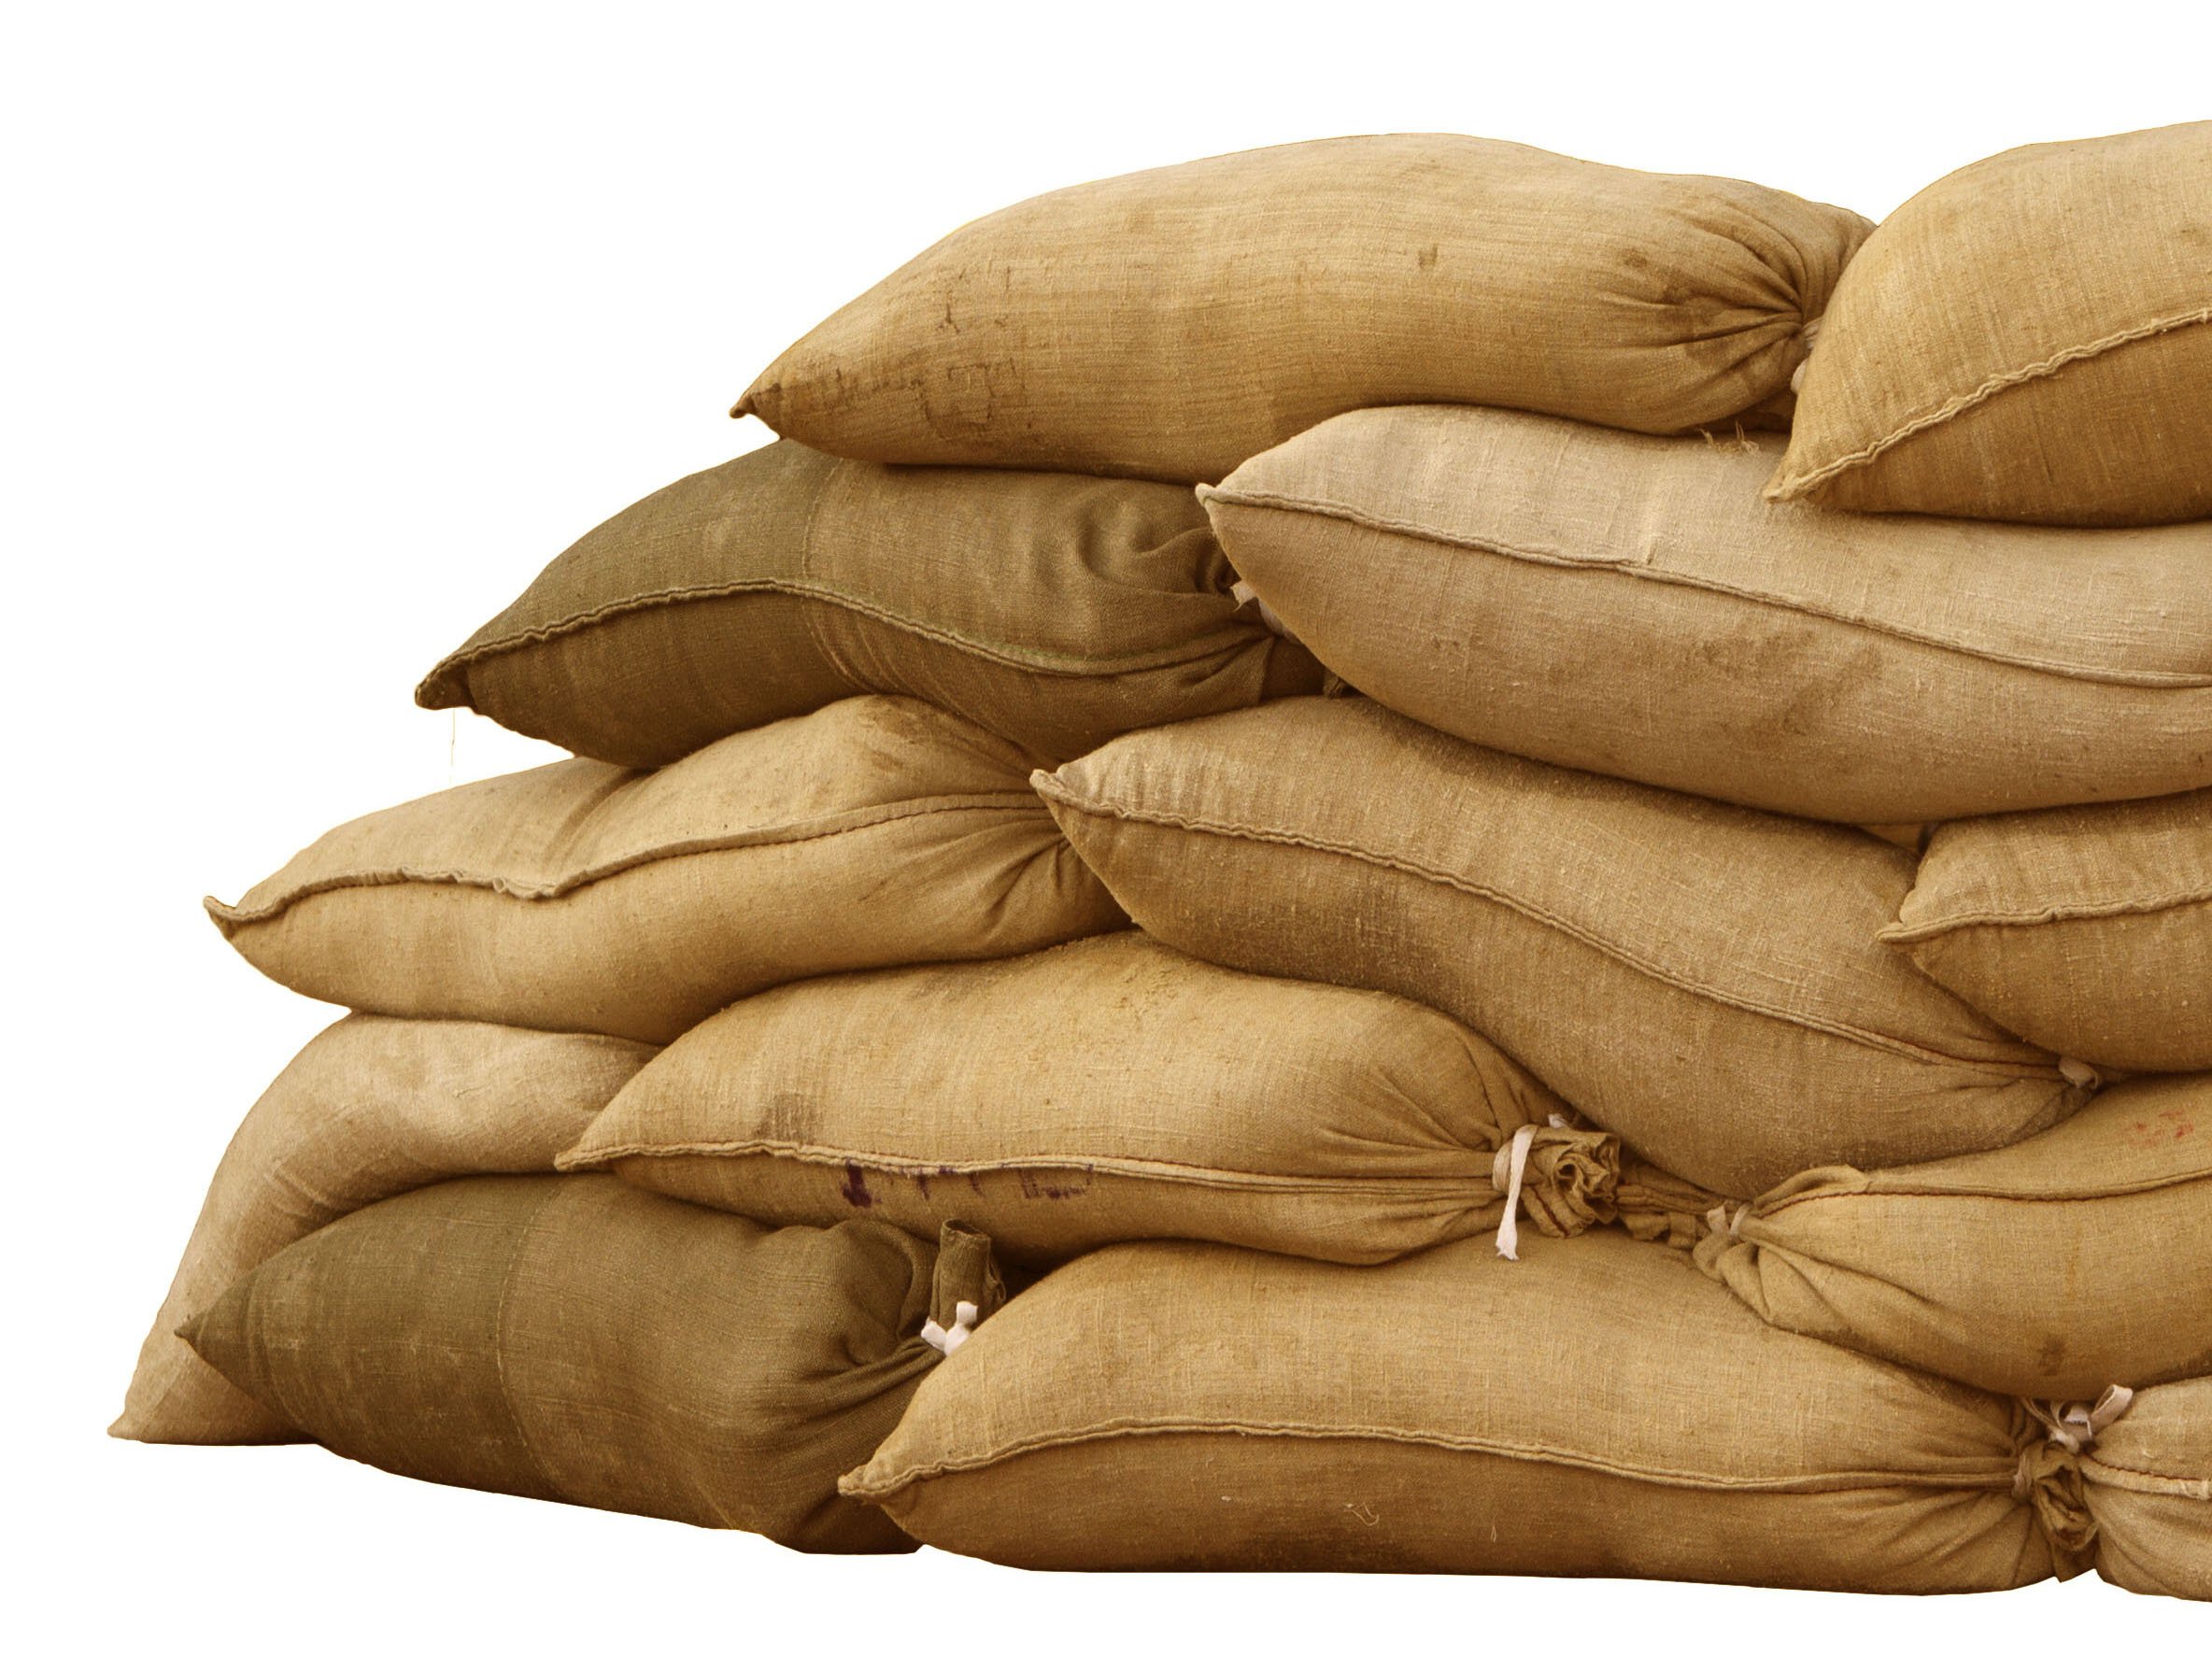 Sandbaggy Burlap Sand Bag - Size: 14 x 26 - Sandbags 50lb Weight capacity - for Flooding, Flood Water Barrier, Tent Sandbags, St